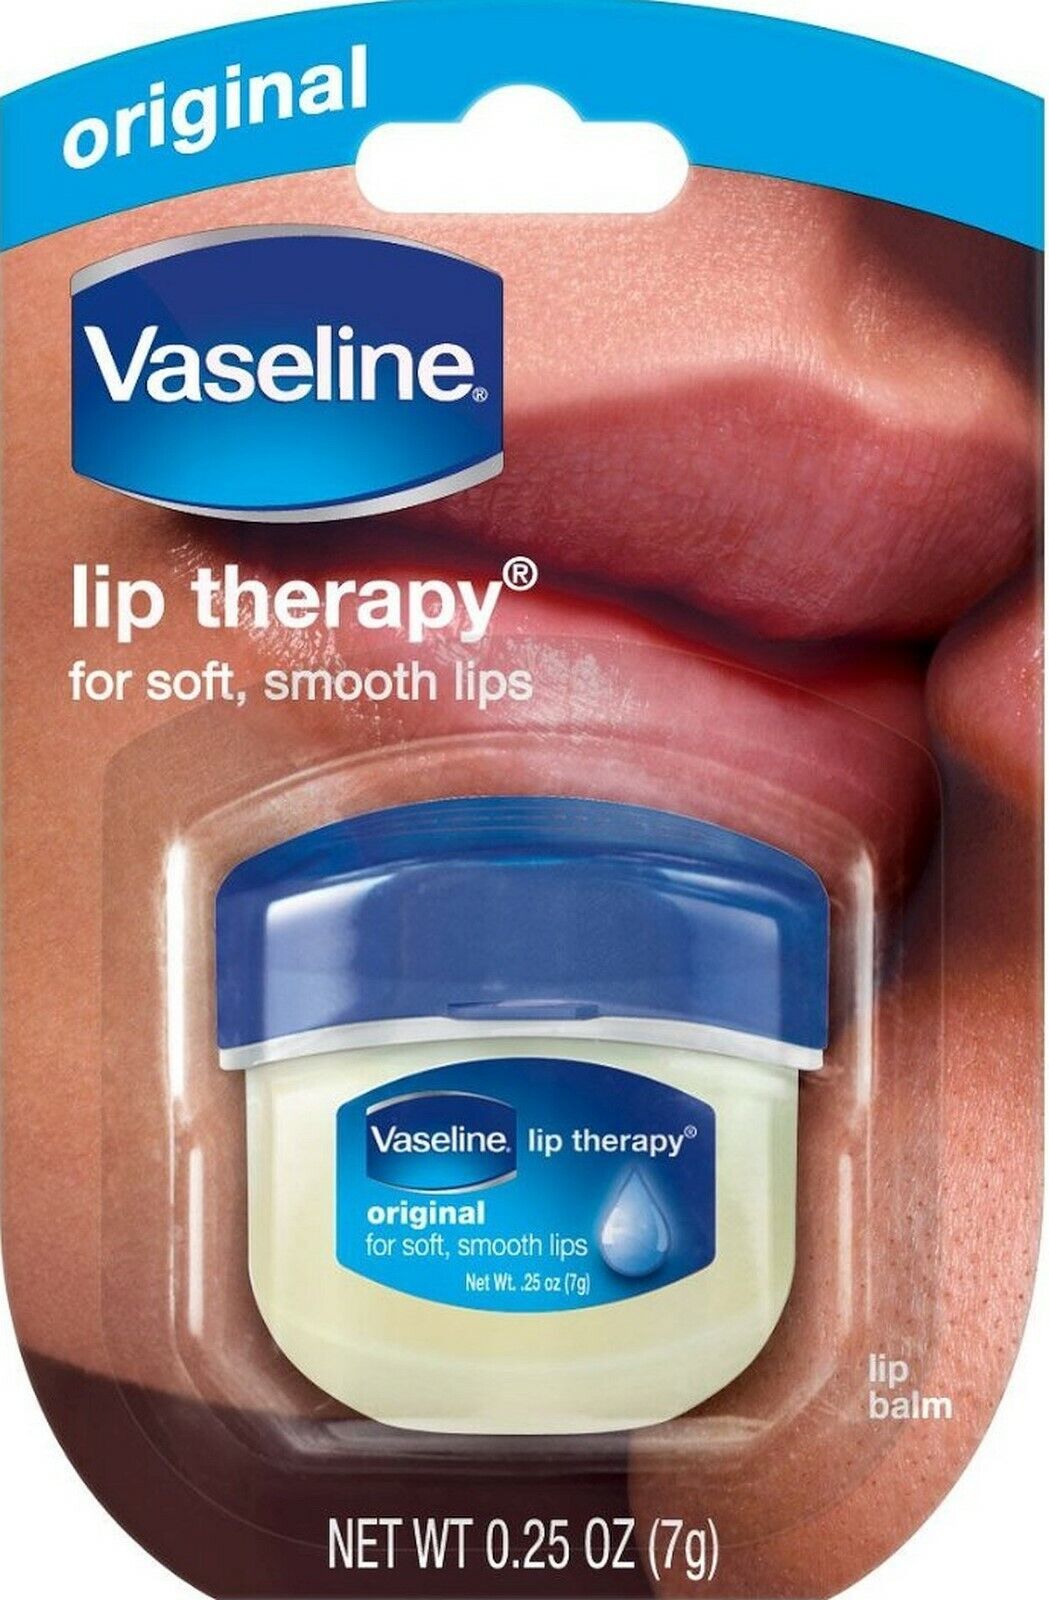 Vaseline LIP THERAPY Original Protect Lips Pocket Small Jar Balm Petroleum jelly - $15.17